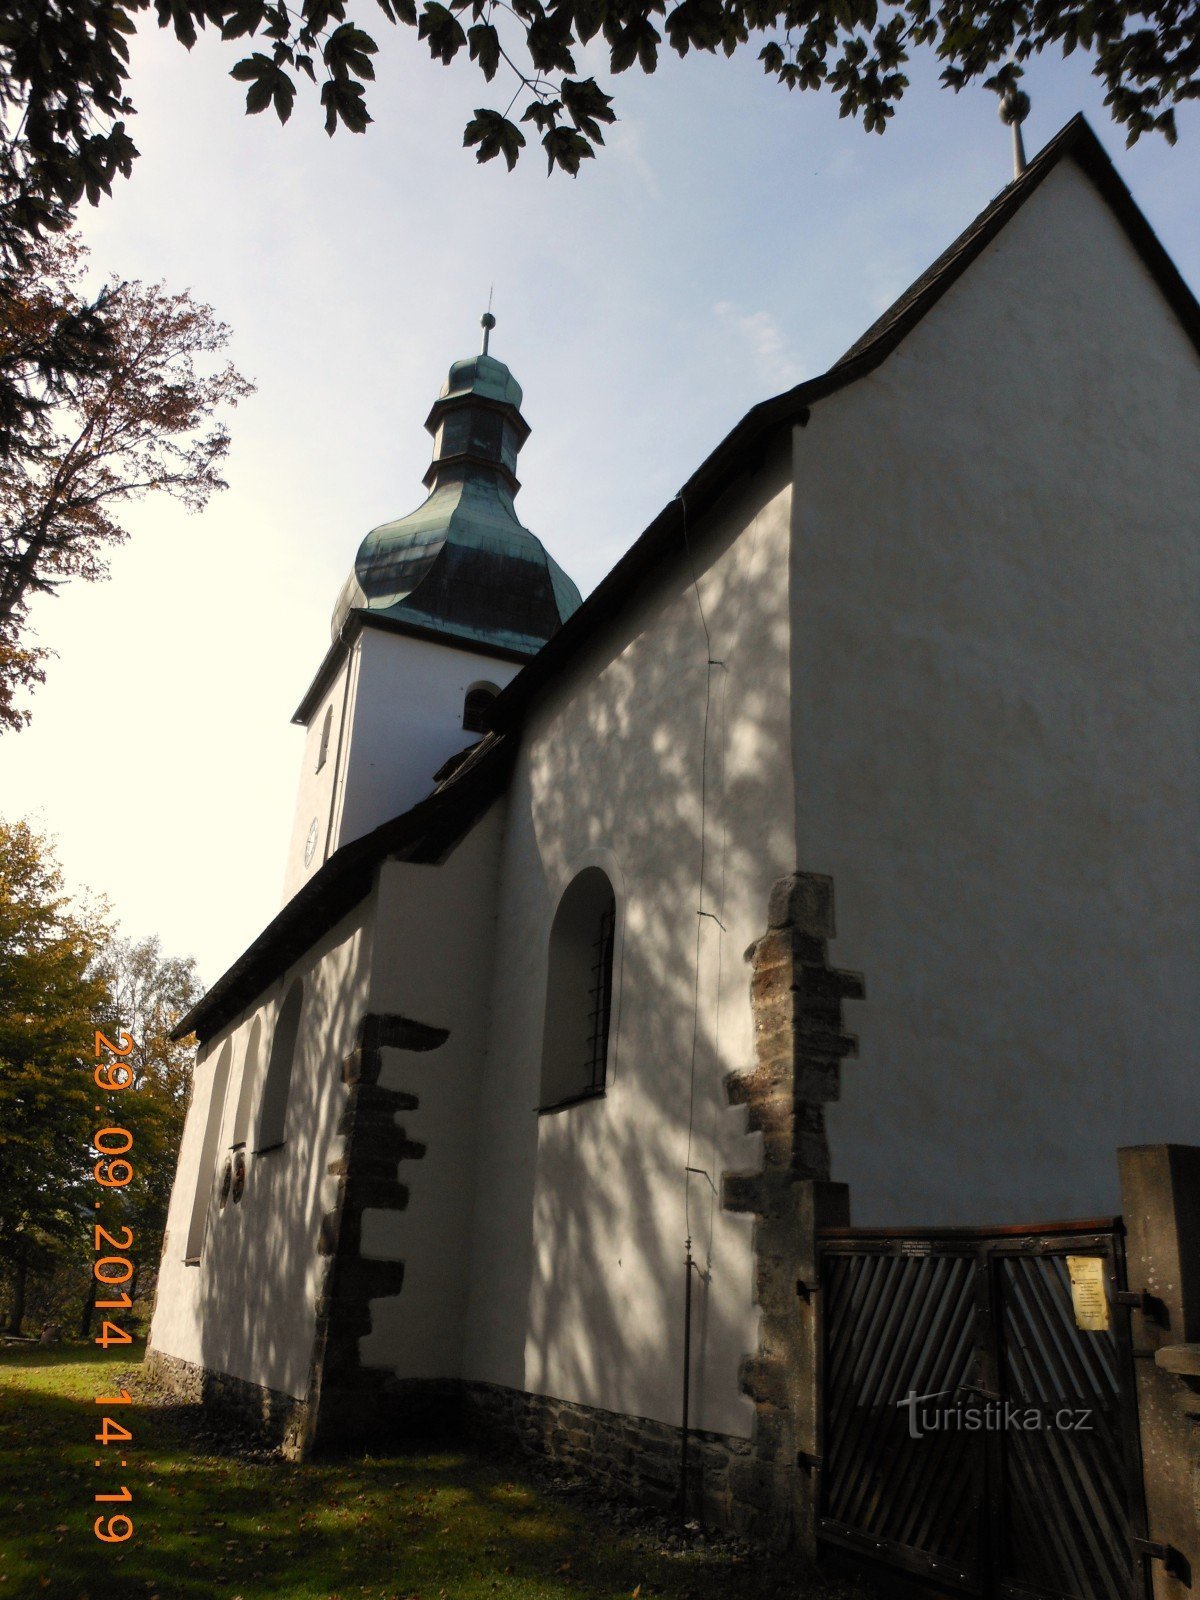 Romanesque church in Kostelní